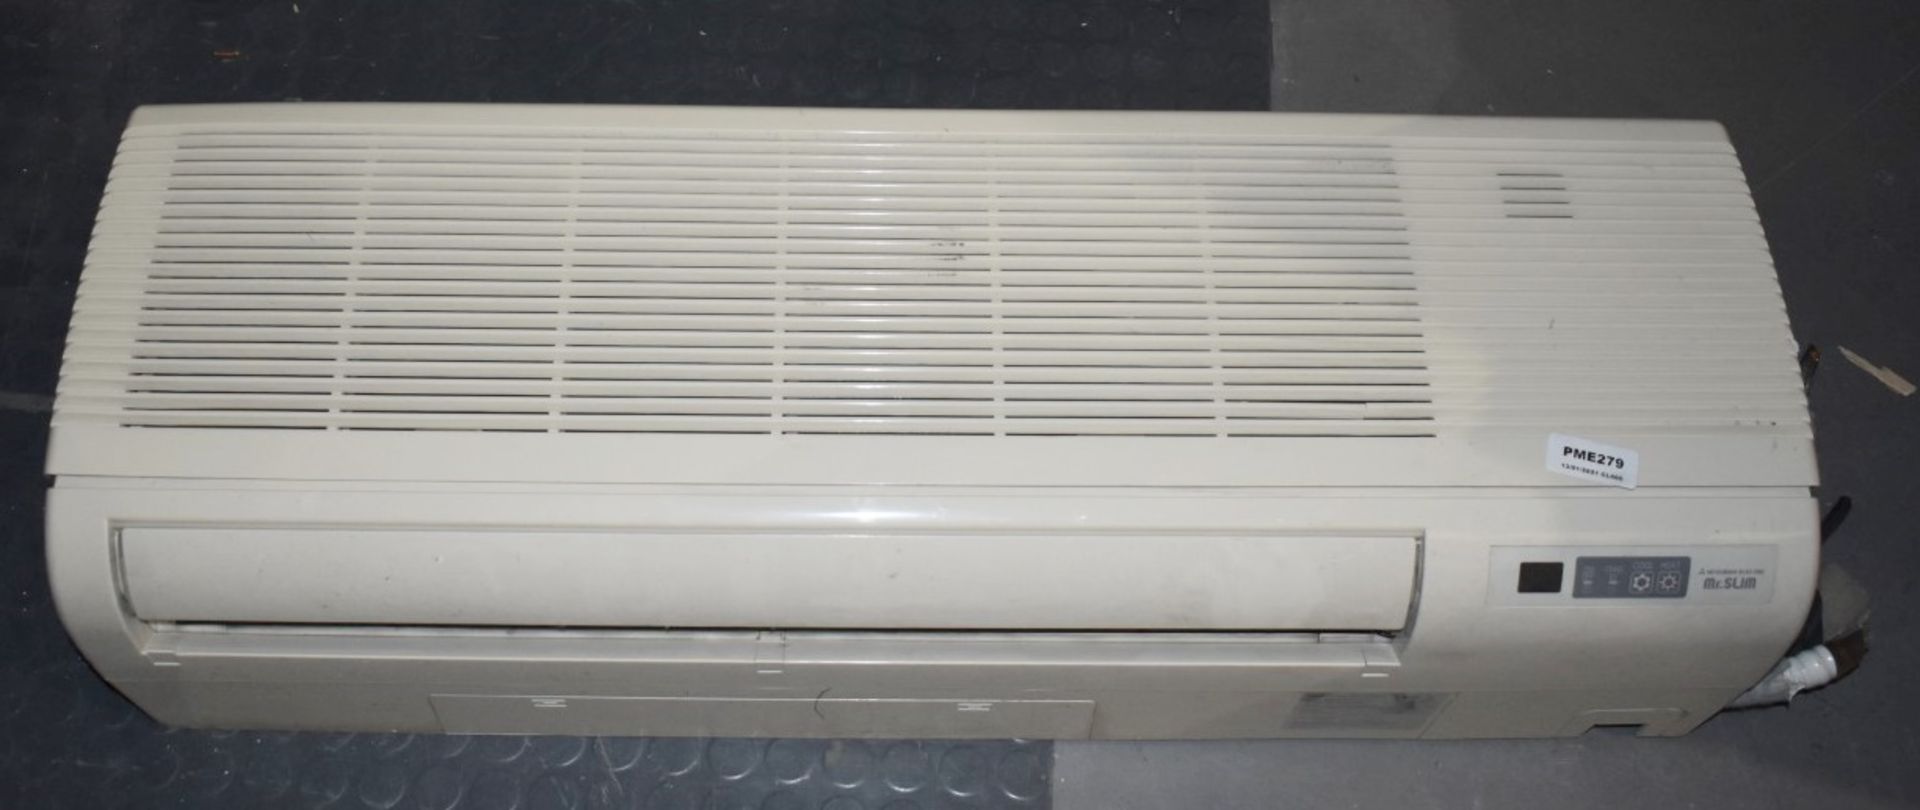 1 x Mitsubishi Mr Slim Air Conditioner Model PKARP35GAL PME279